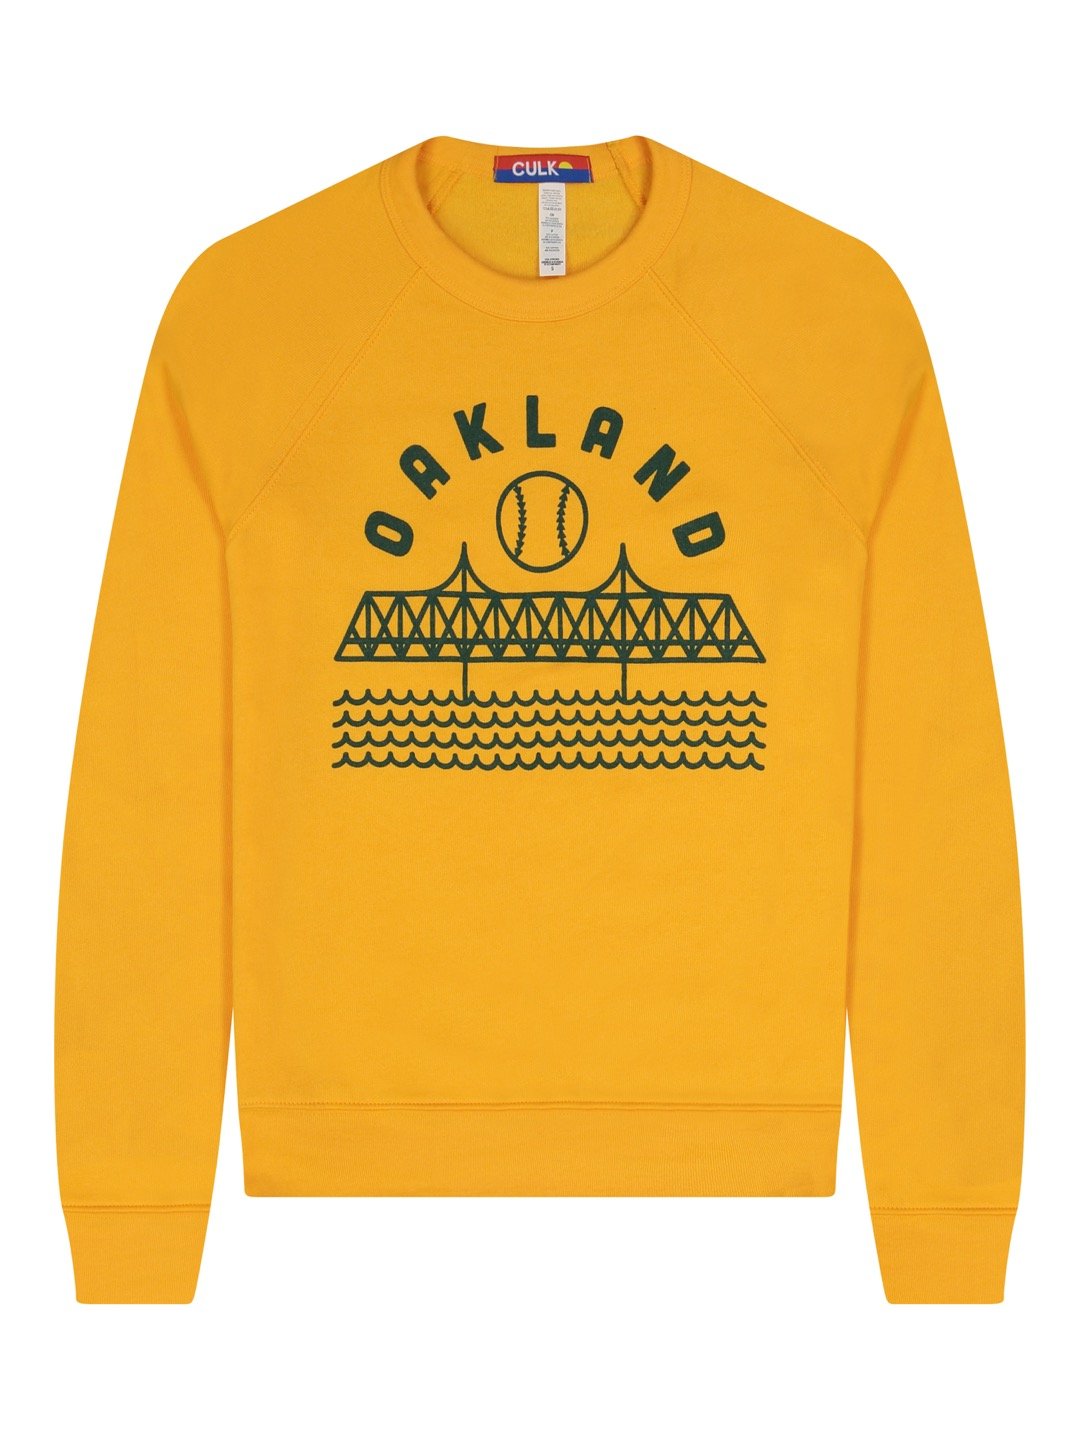 Oakland Baseball Crewneck Sweatshirt Gold-Culk